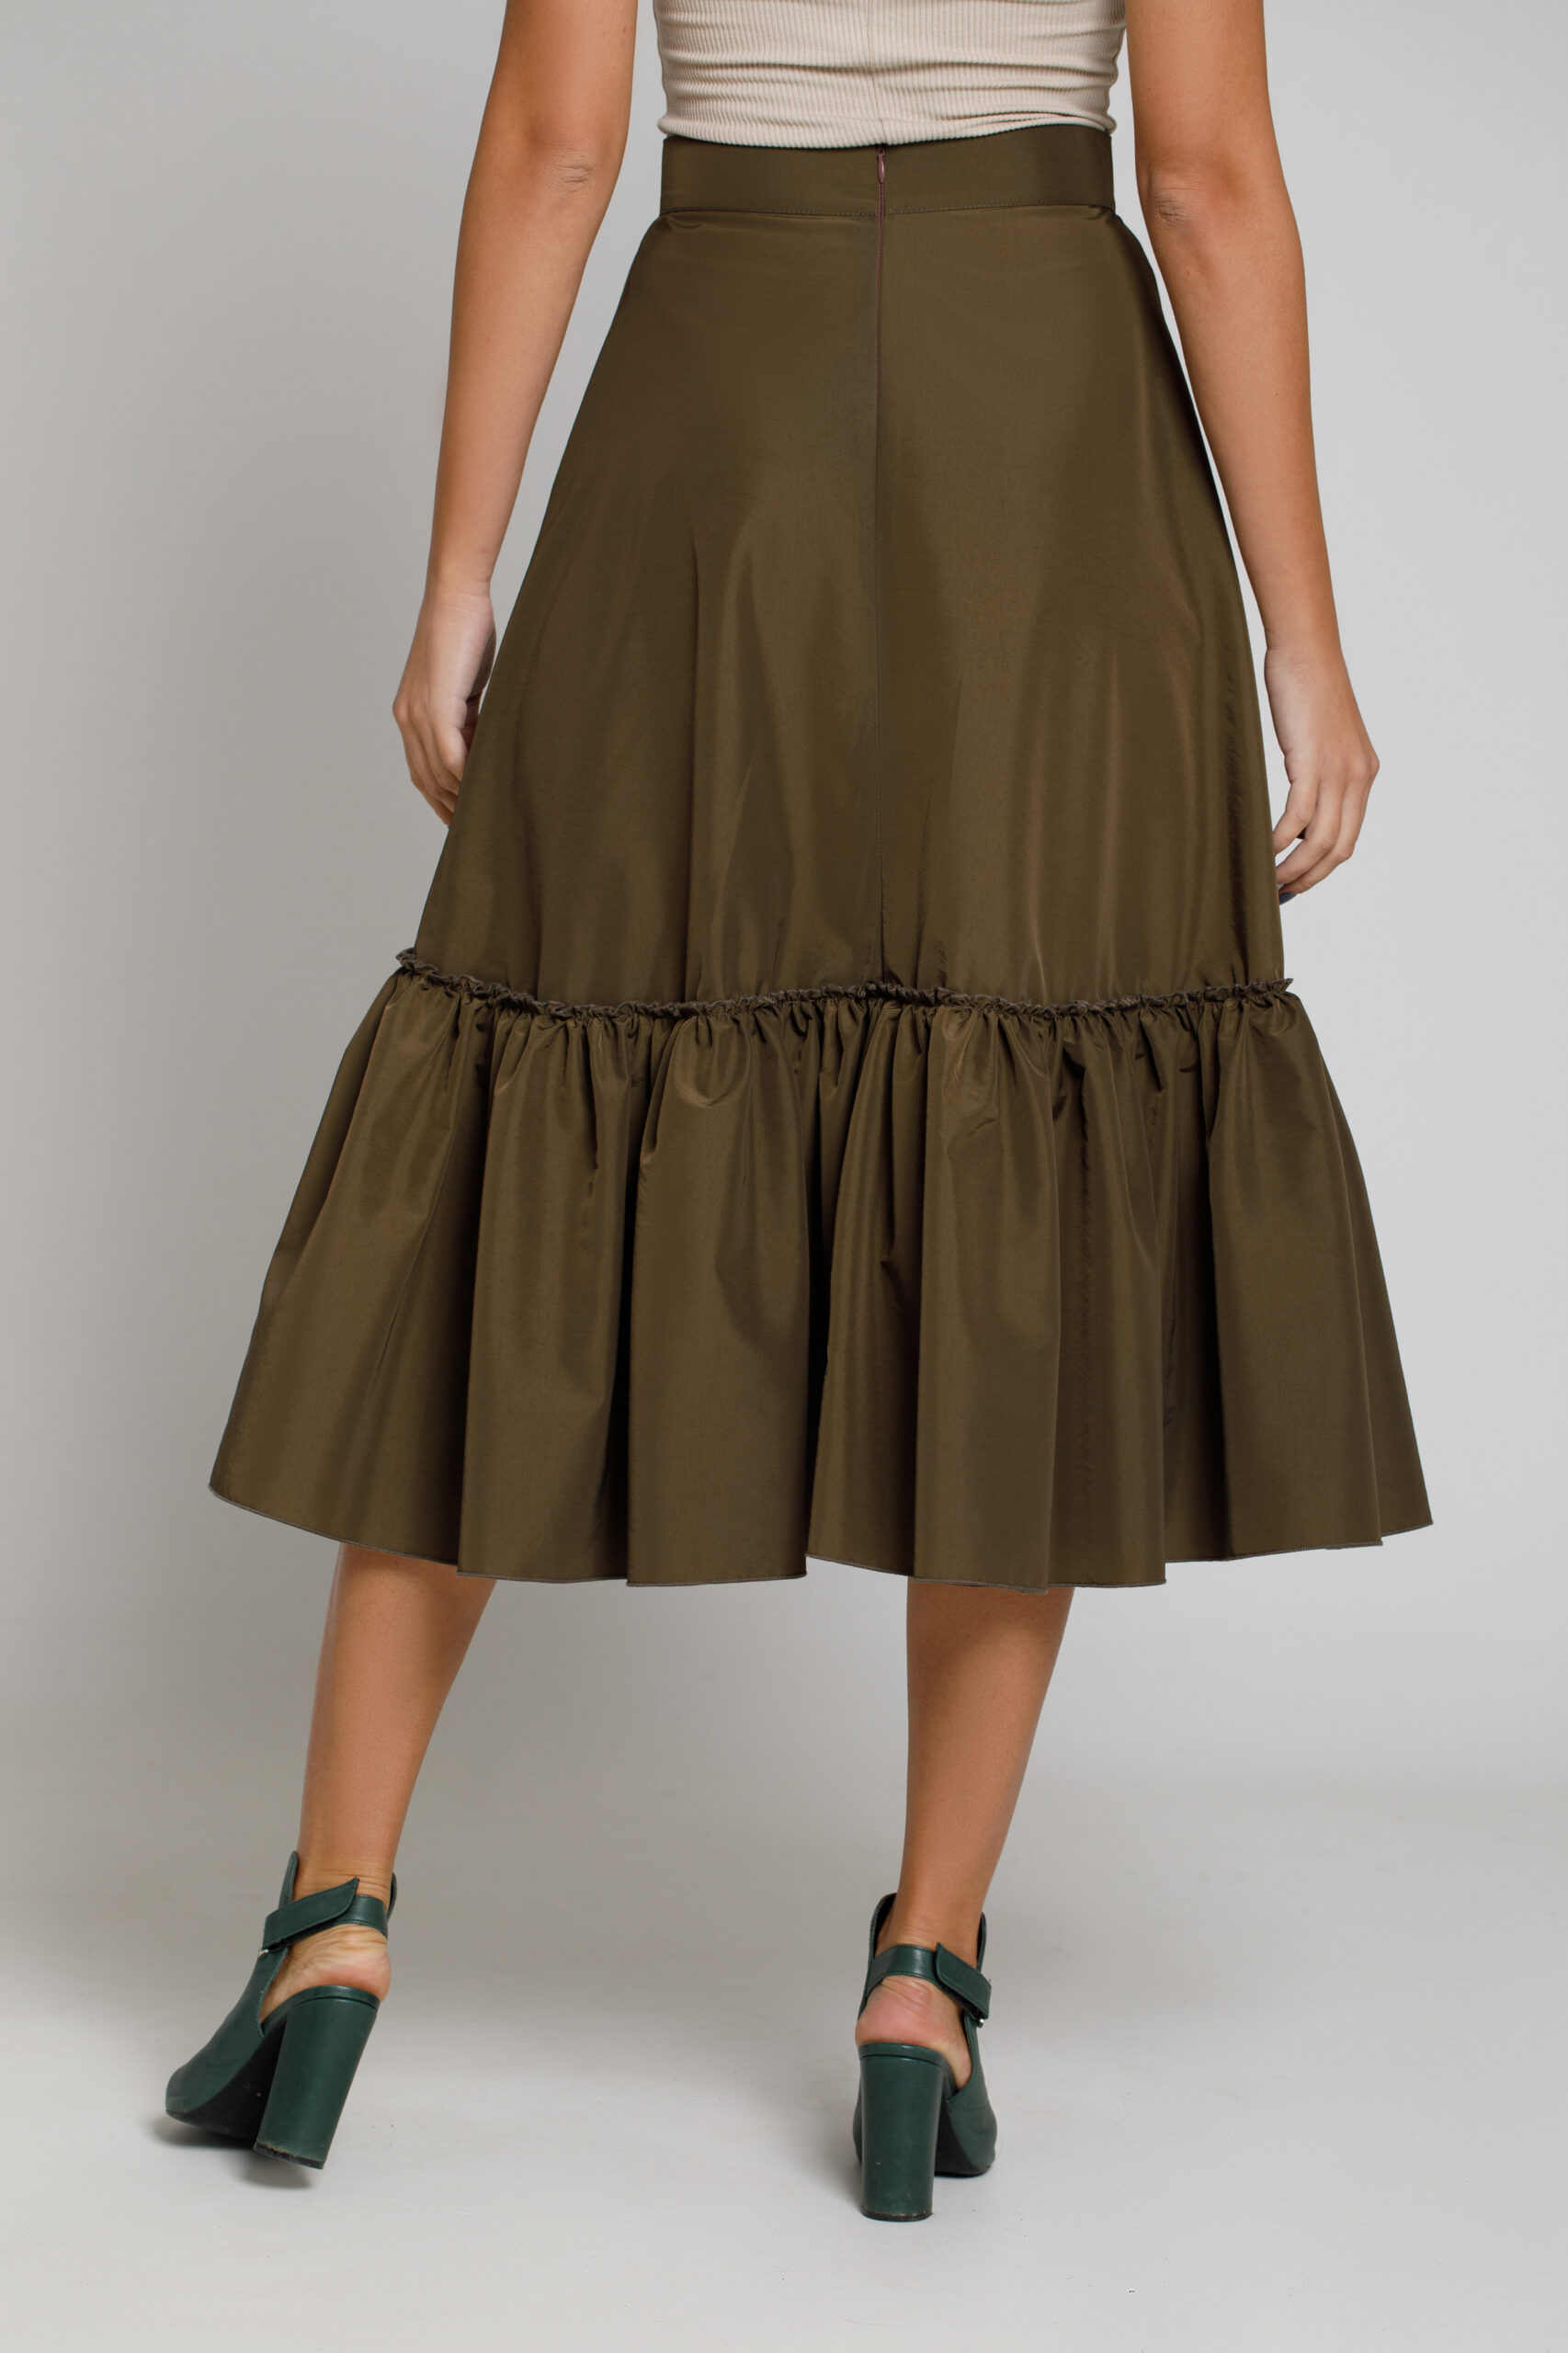 HAZEL skirt in khaki fabric with ruffles. Natural fabrics, original design, handmade embroidery